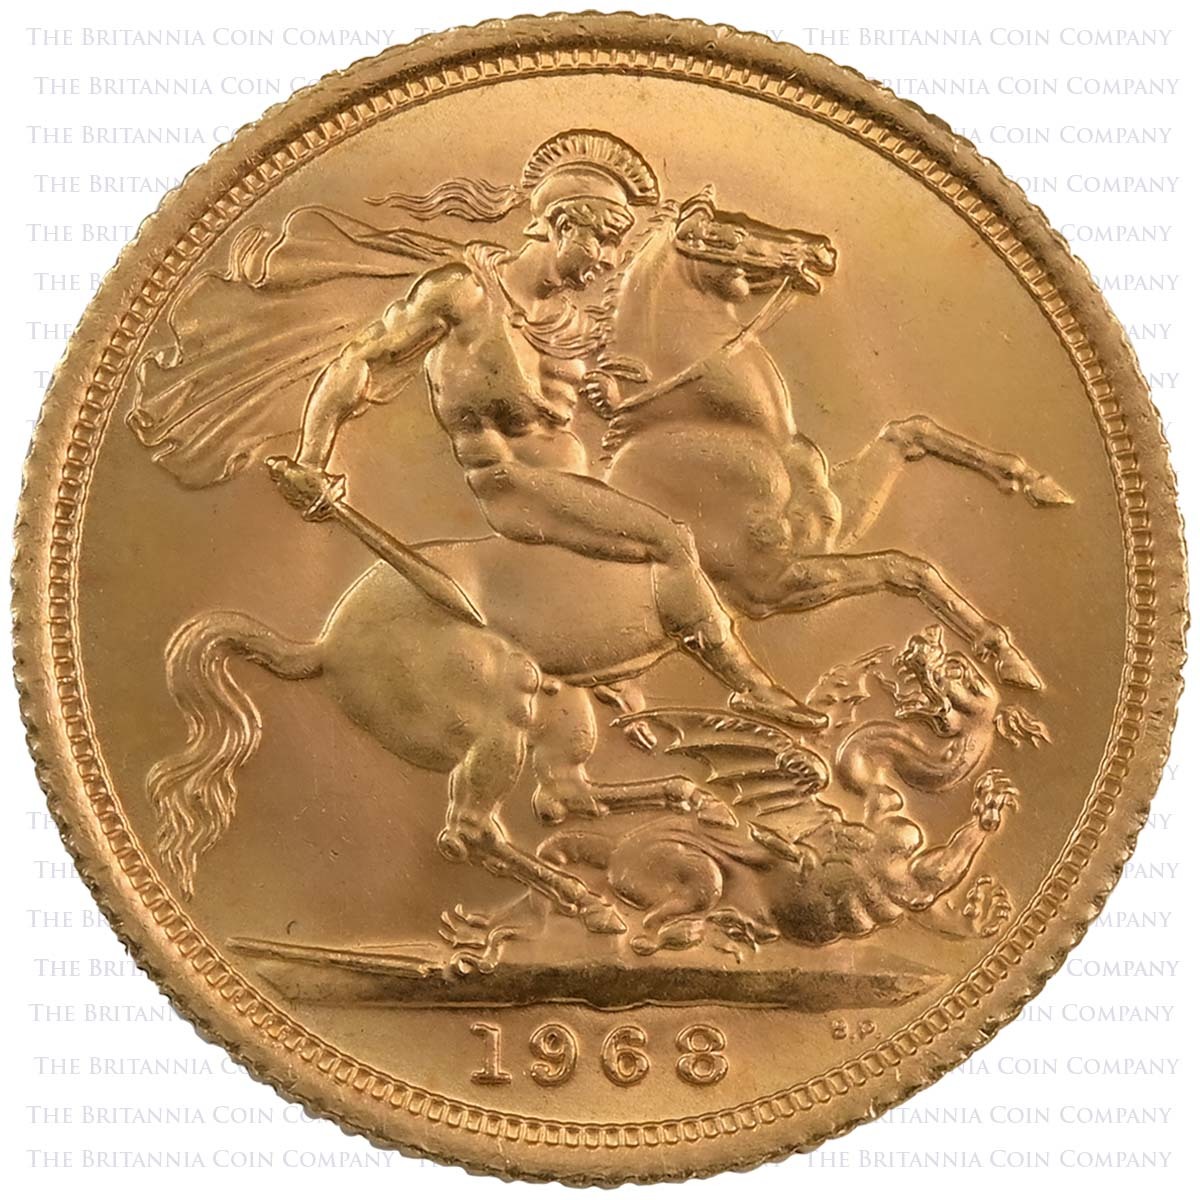 2004 Elizabeth II Gillick Portrait 13 Coin Set 1968 Sovereign Reverse